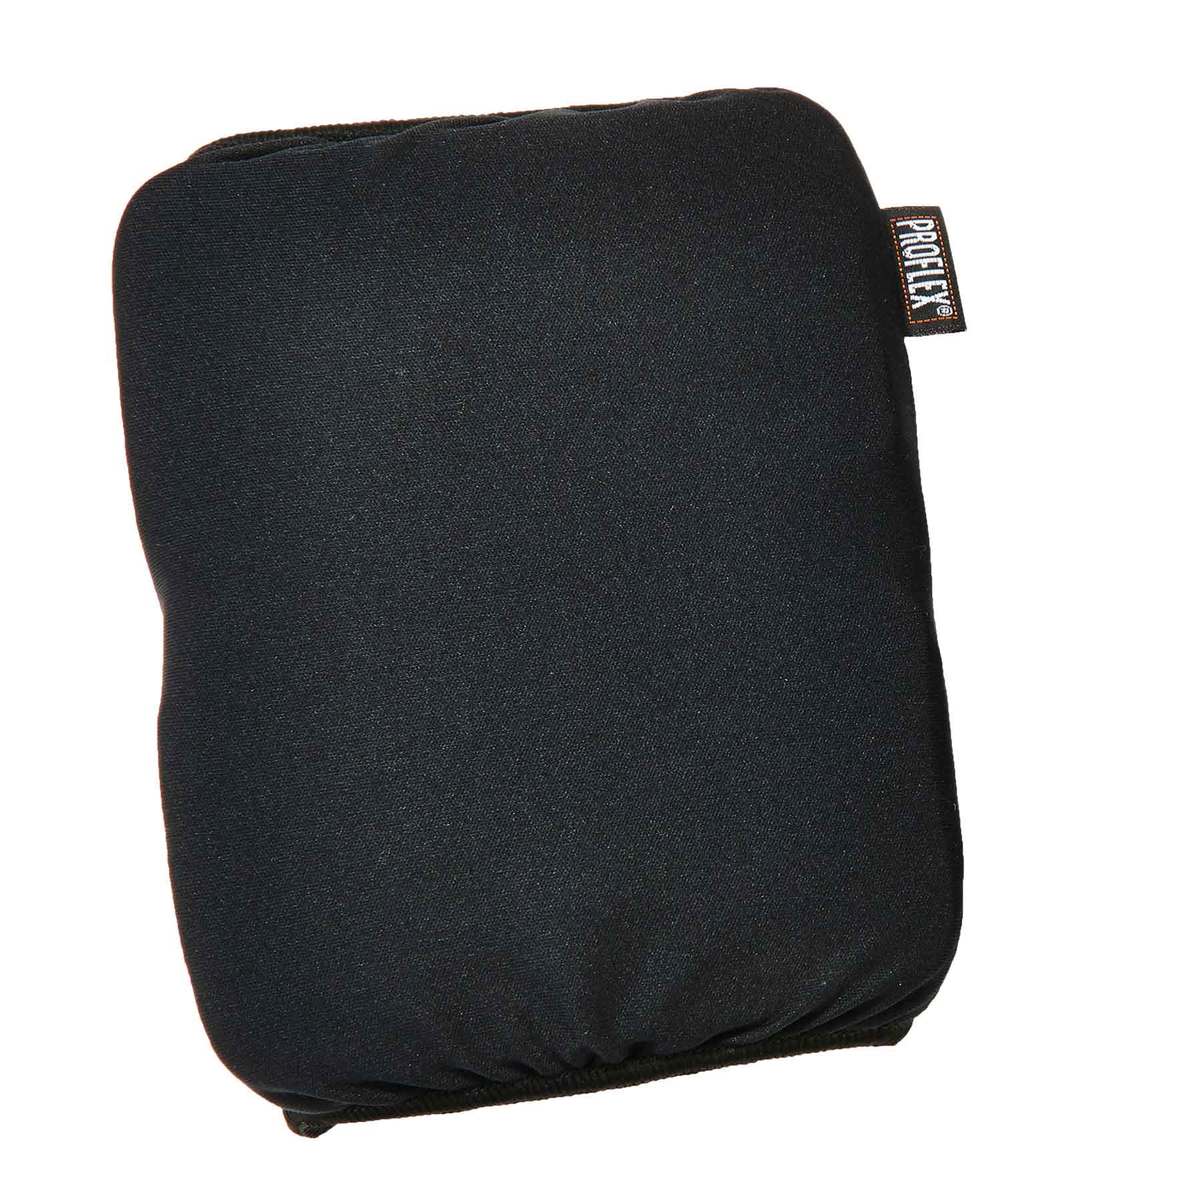 Ergodyne One Size Fits Most Black ProFlex® 260 Foam Soft Slip-On Knee Pad